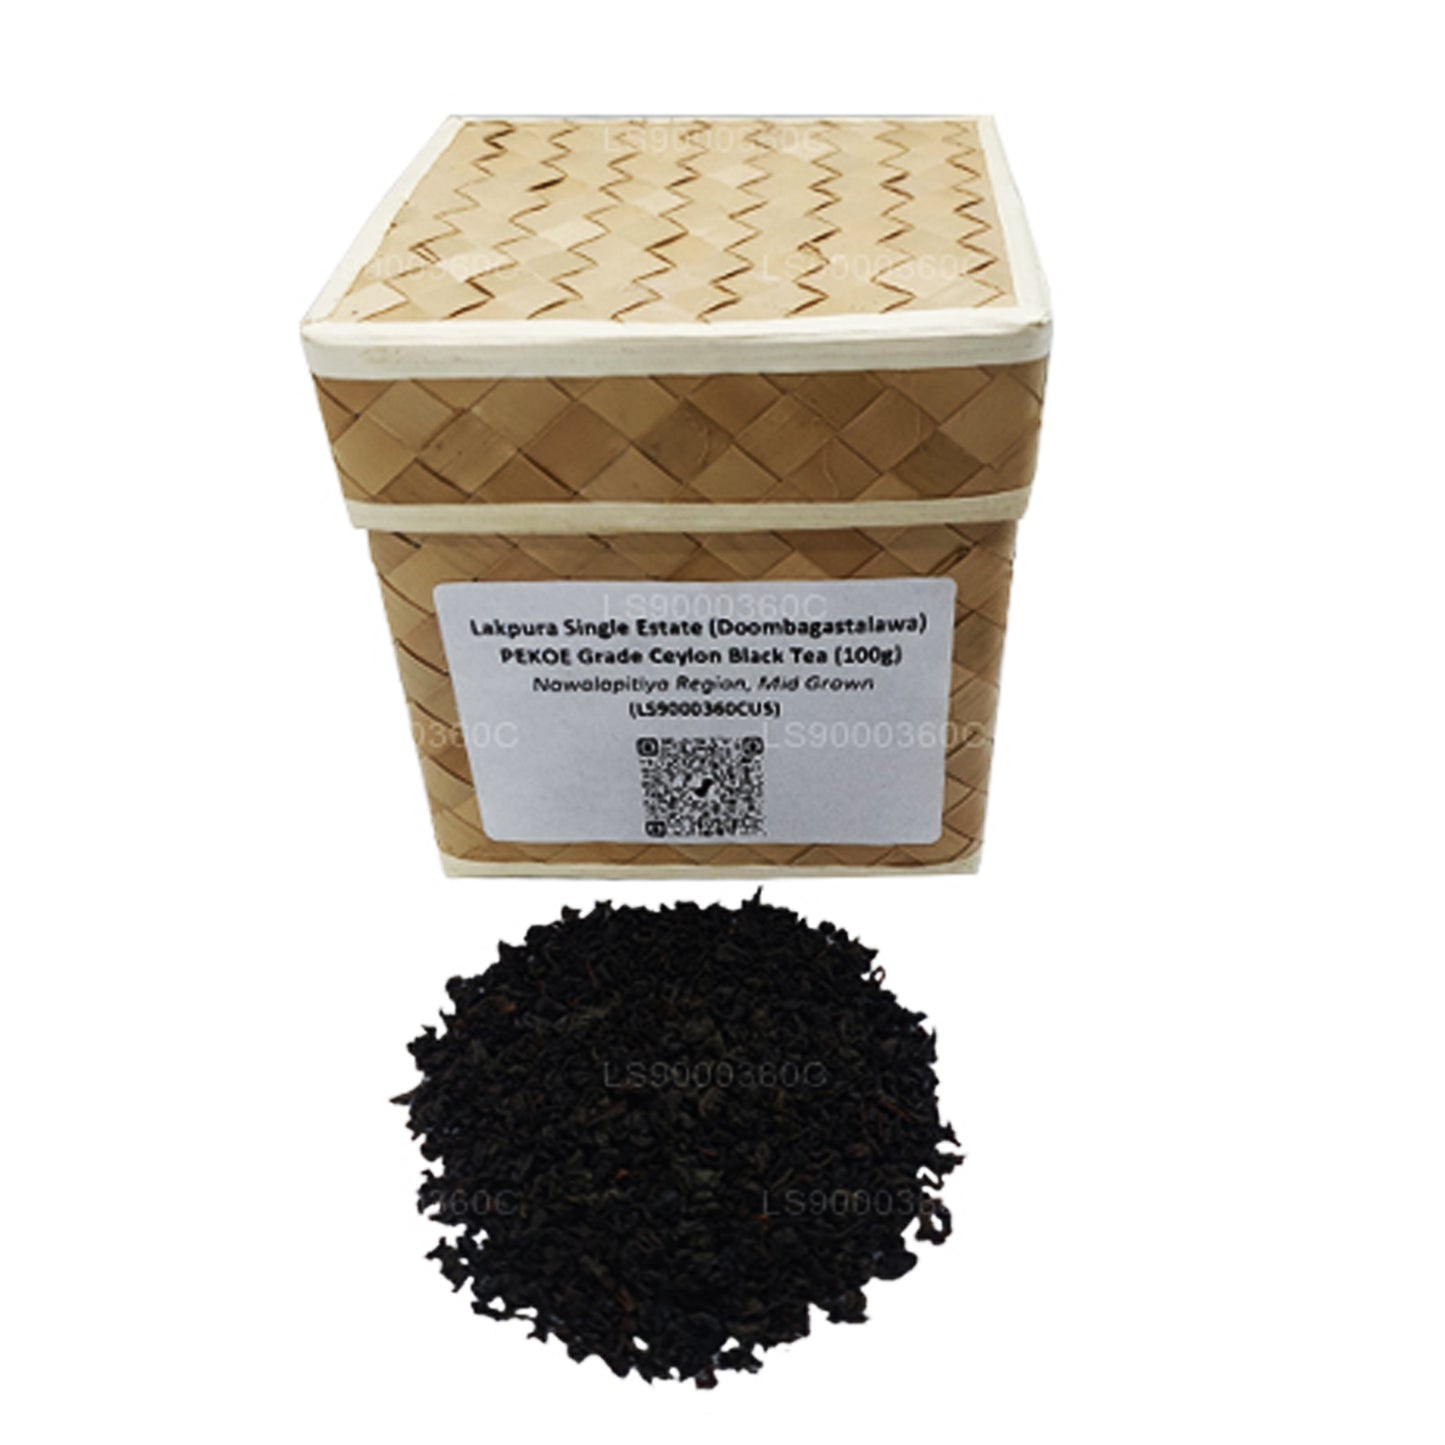 Thé noir de Ceylan Lakpura Single Estate (Doombagastalawa) PEKOE Grade (100 g)